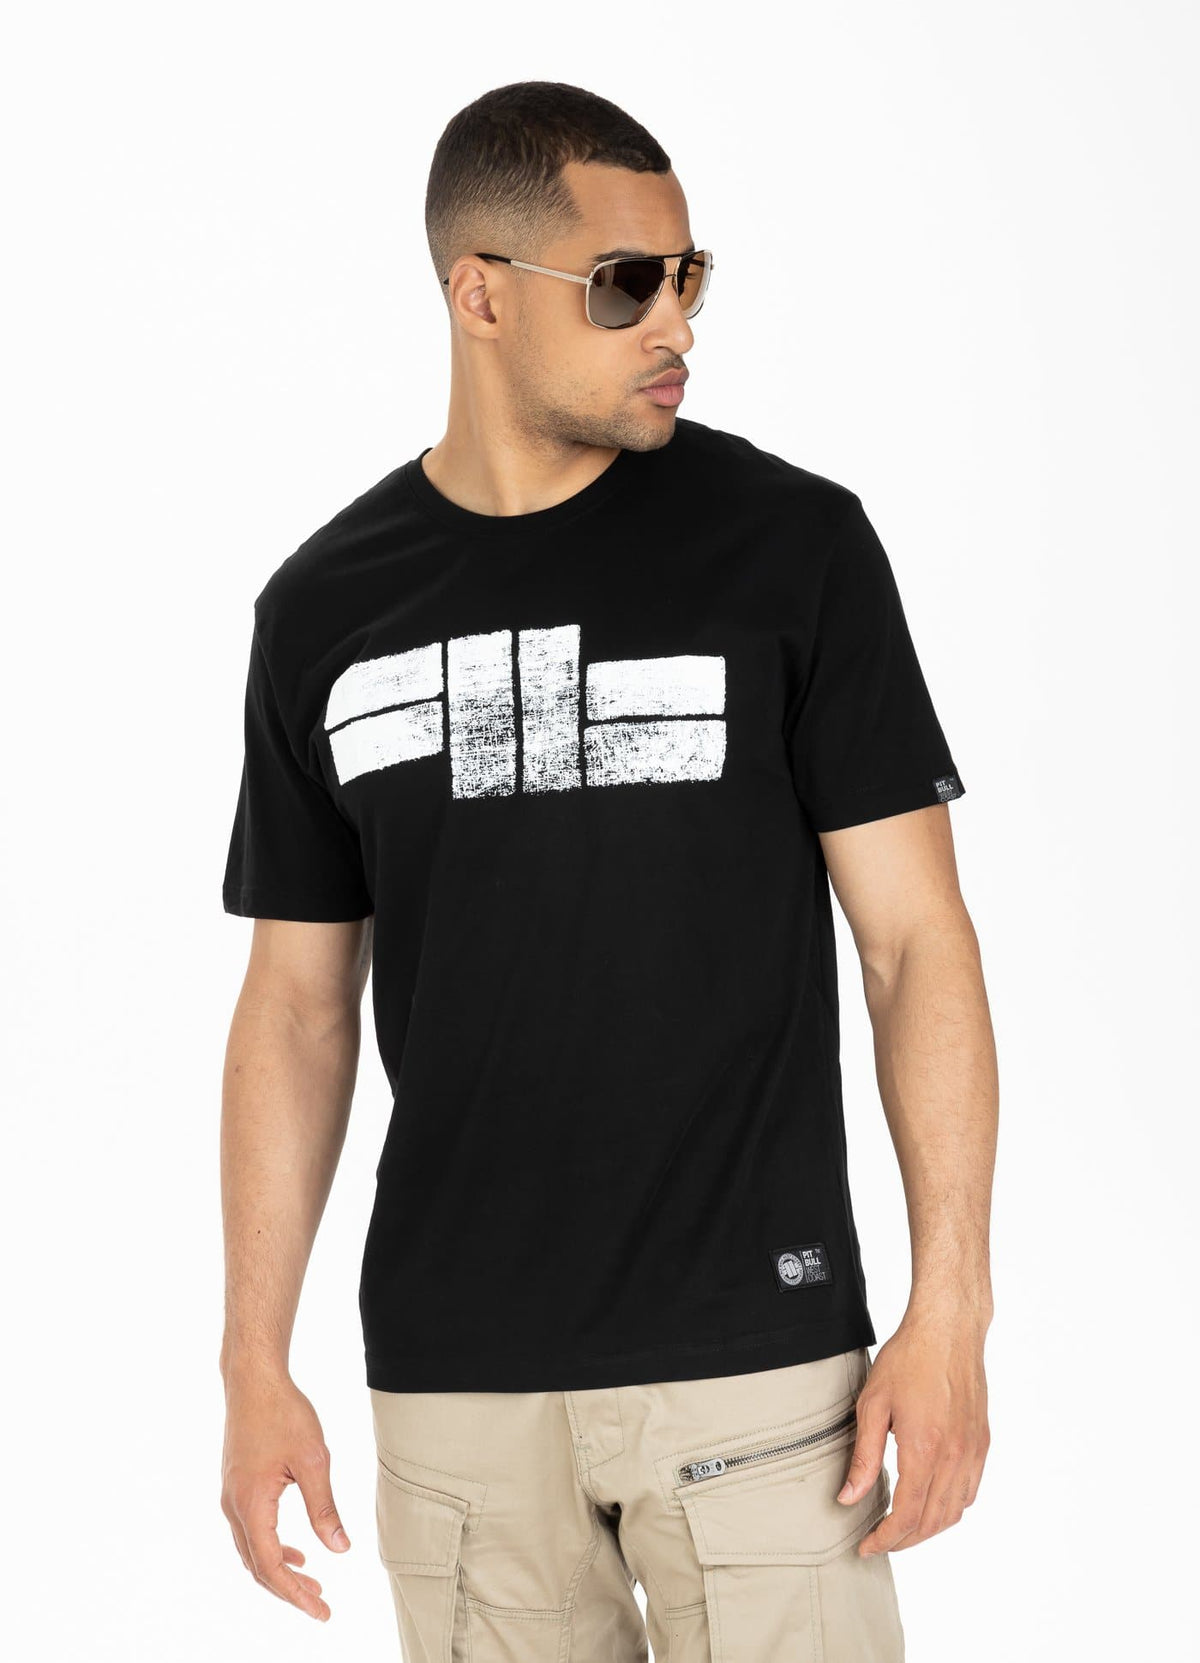 T-shirt CLASSIC LOGO Black - Pitbull West Coast International Store 